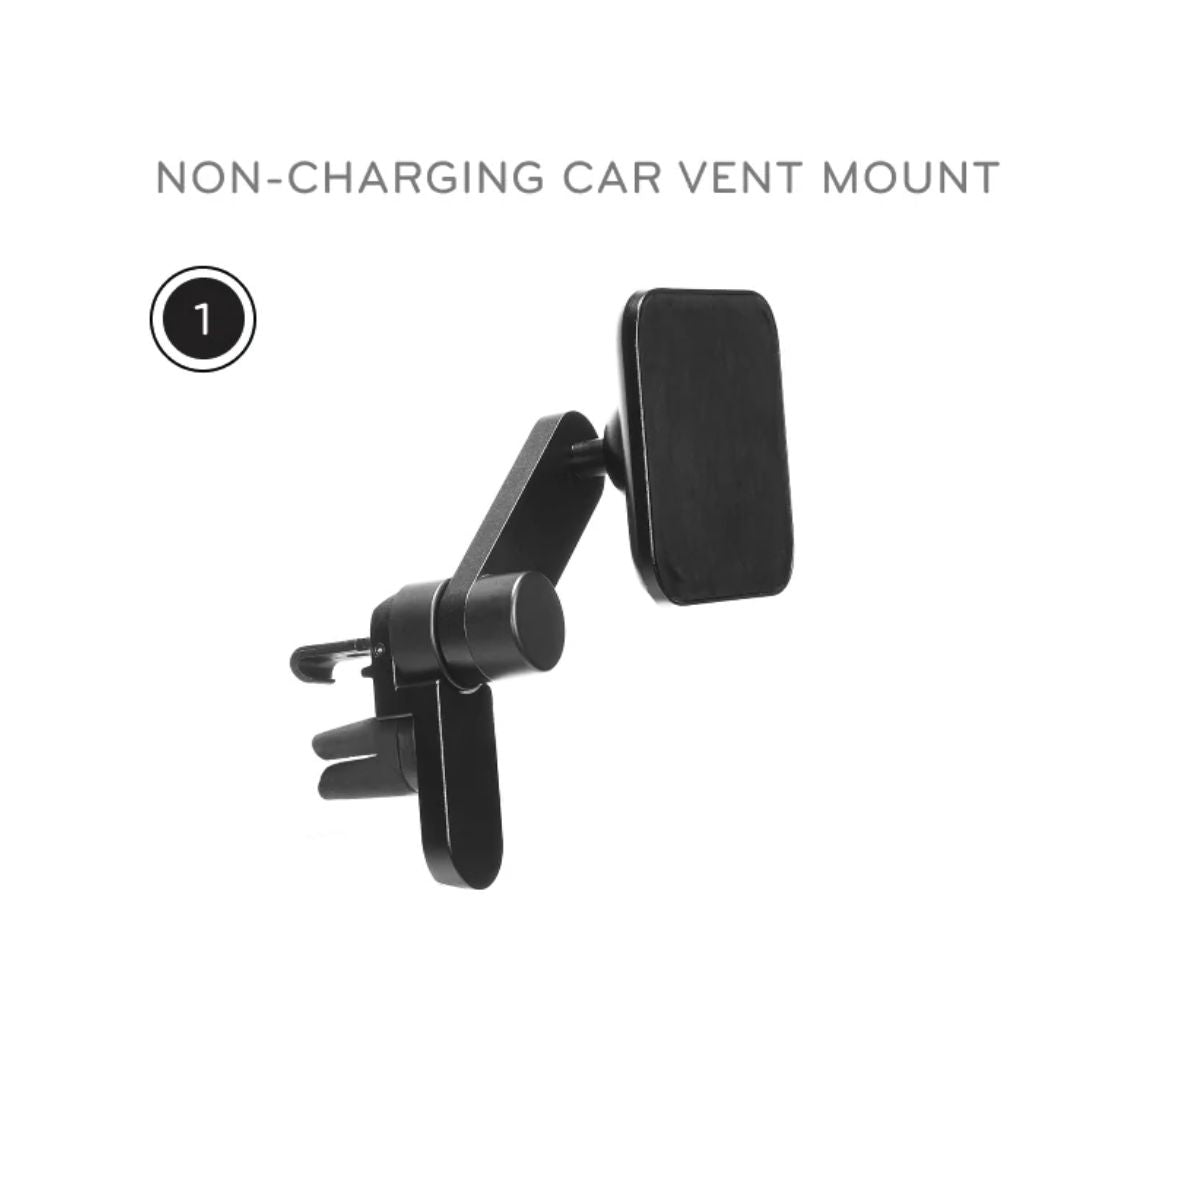 Car Vent Mount - Non Charging Model 6